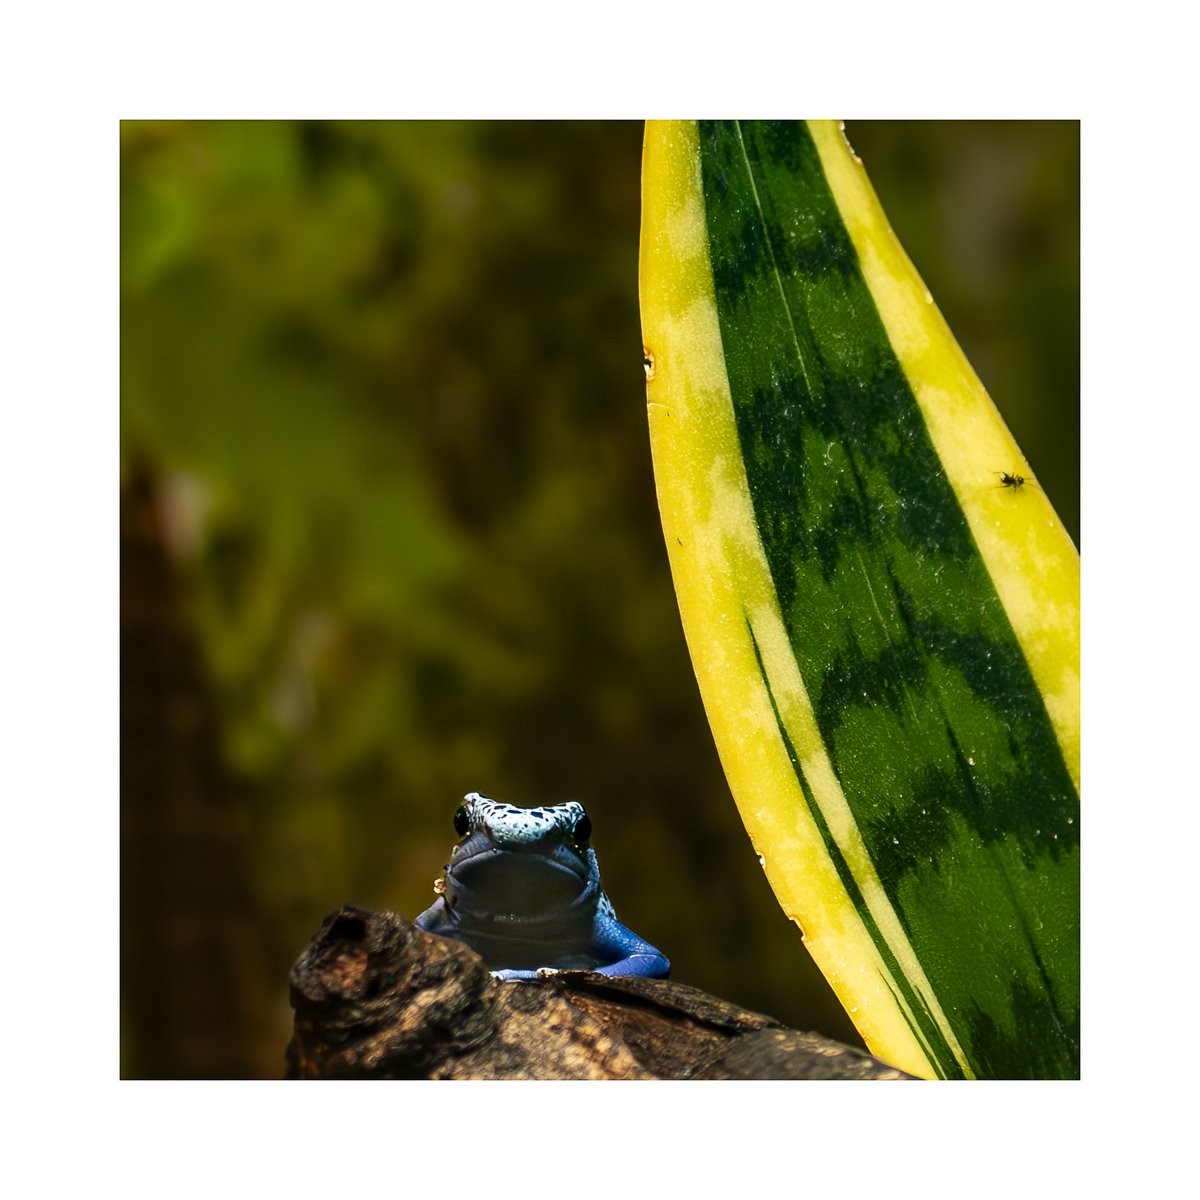 An angry blue frog at Edinburgh zoo